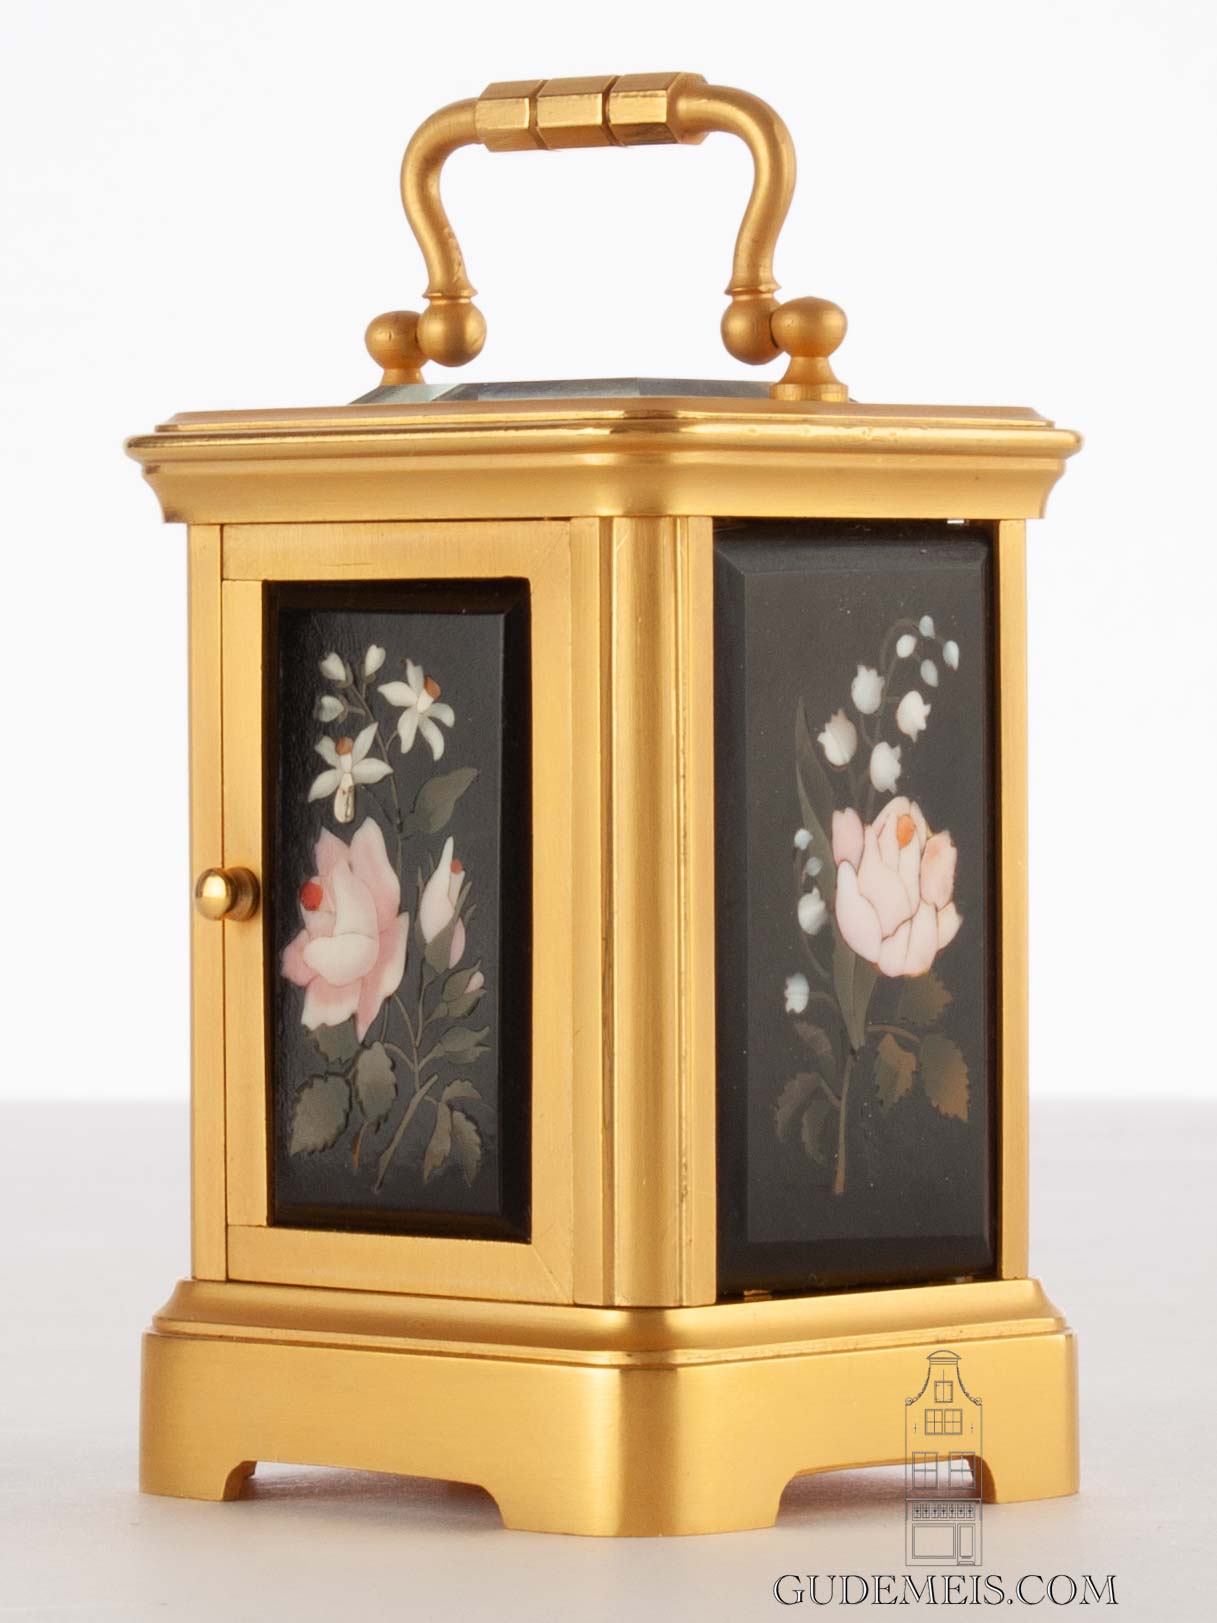 miniature-antique-carriage-clock-H. Bosi-Firenze-French-pietra-dura-gold-plated-bronze-ormolu-floral-motifs-